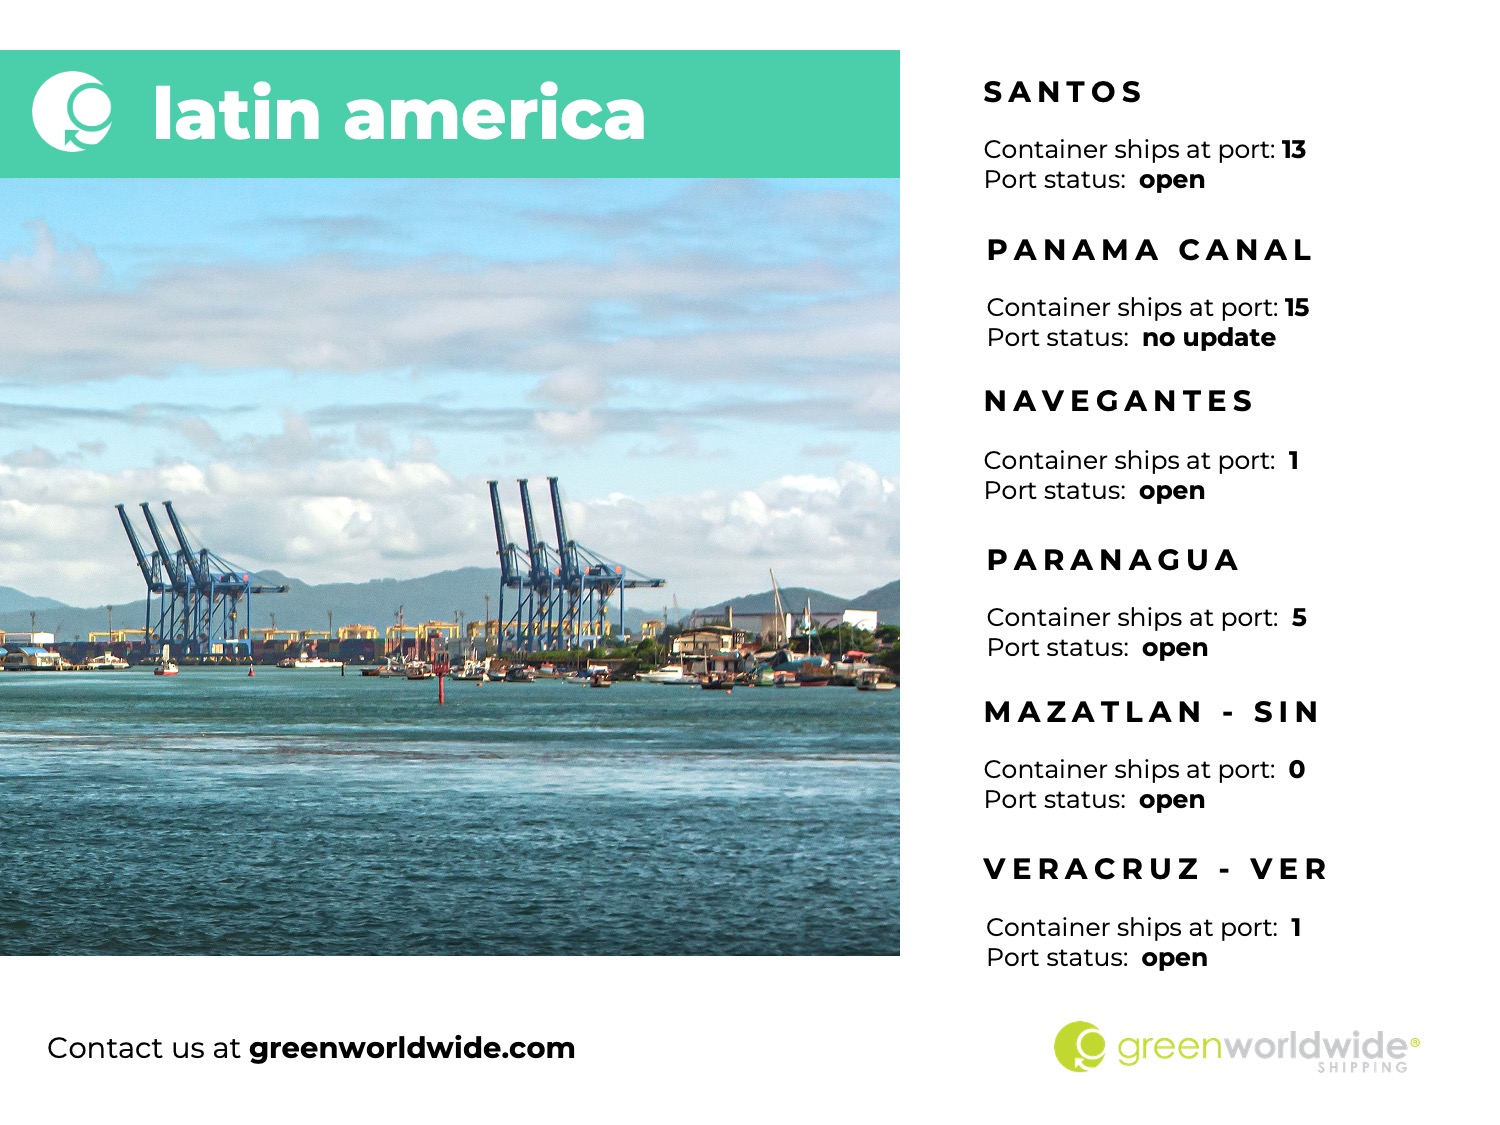 green worldwide shipping, freight market update, latin america port congestion